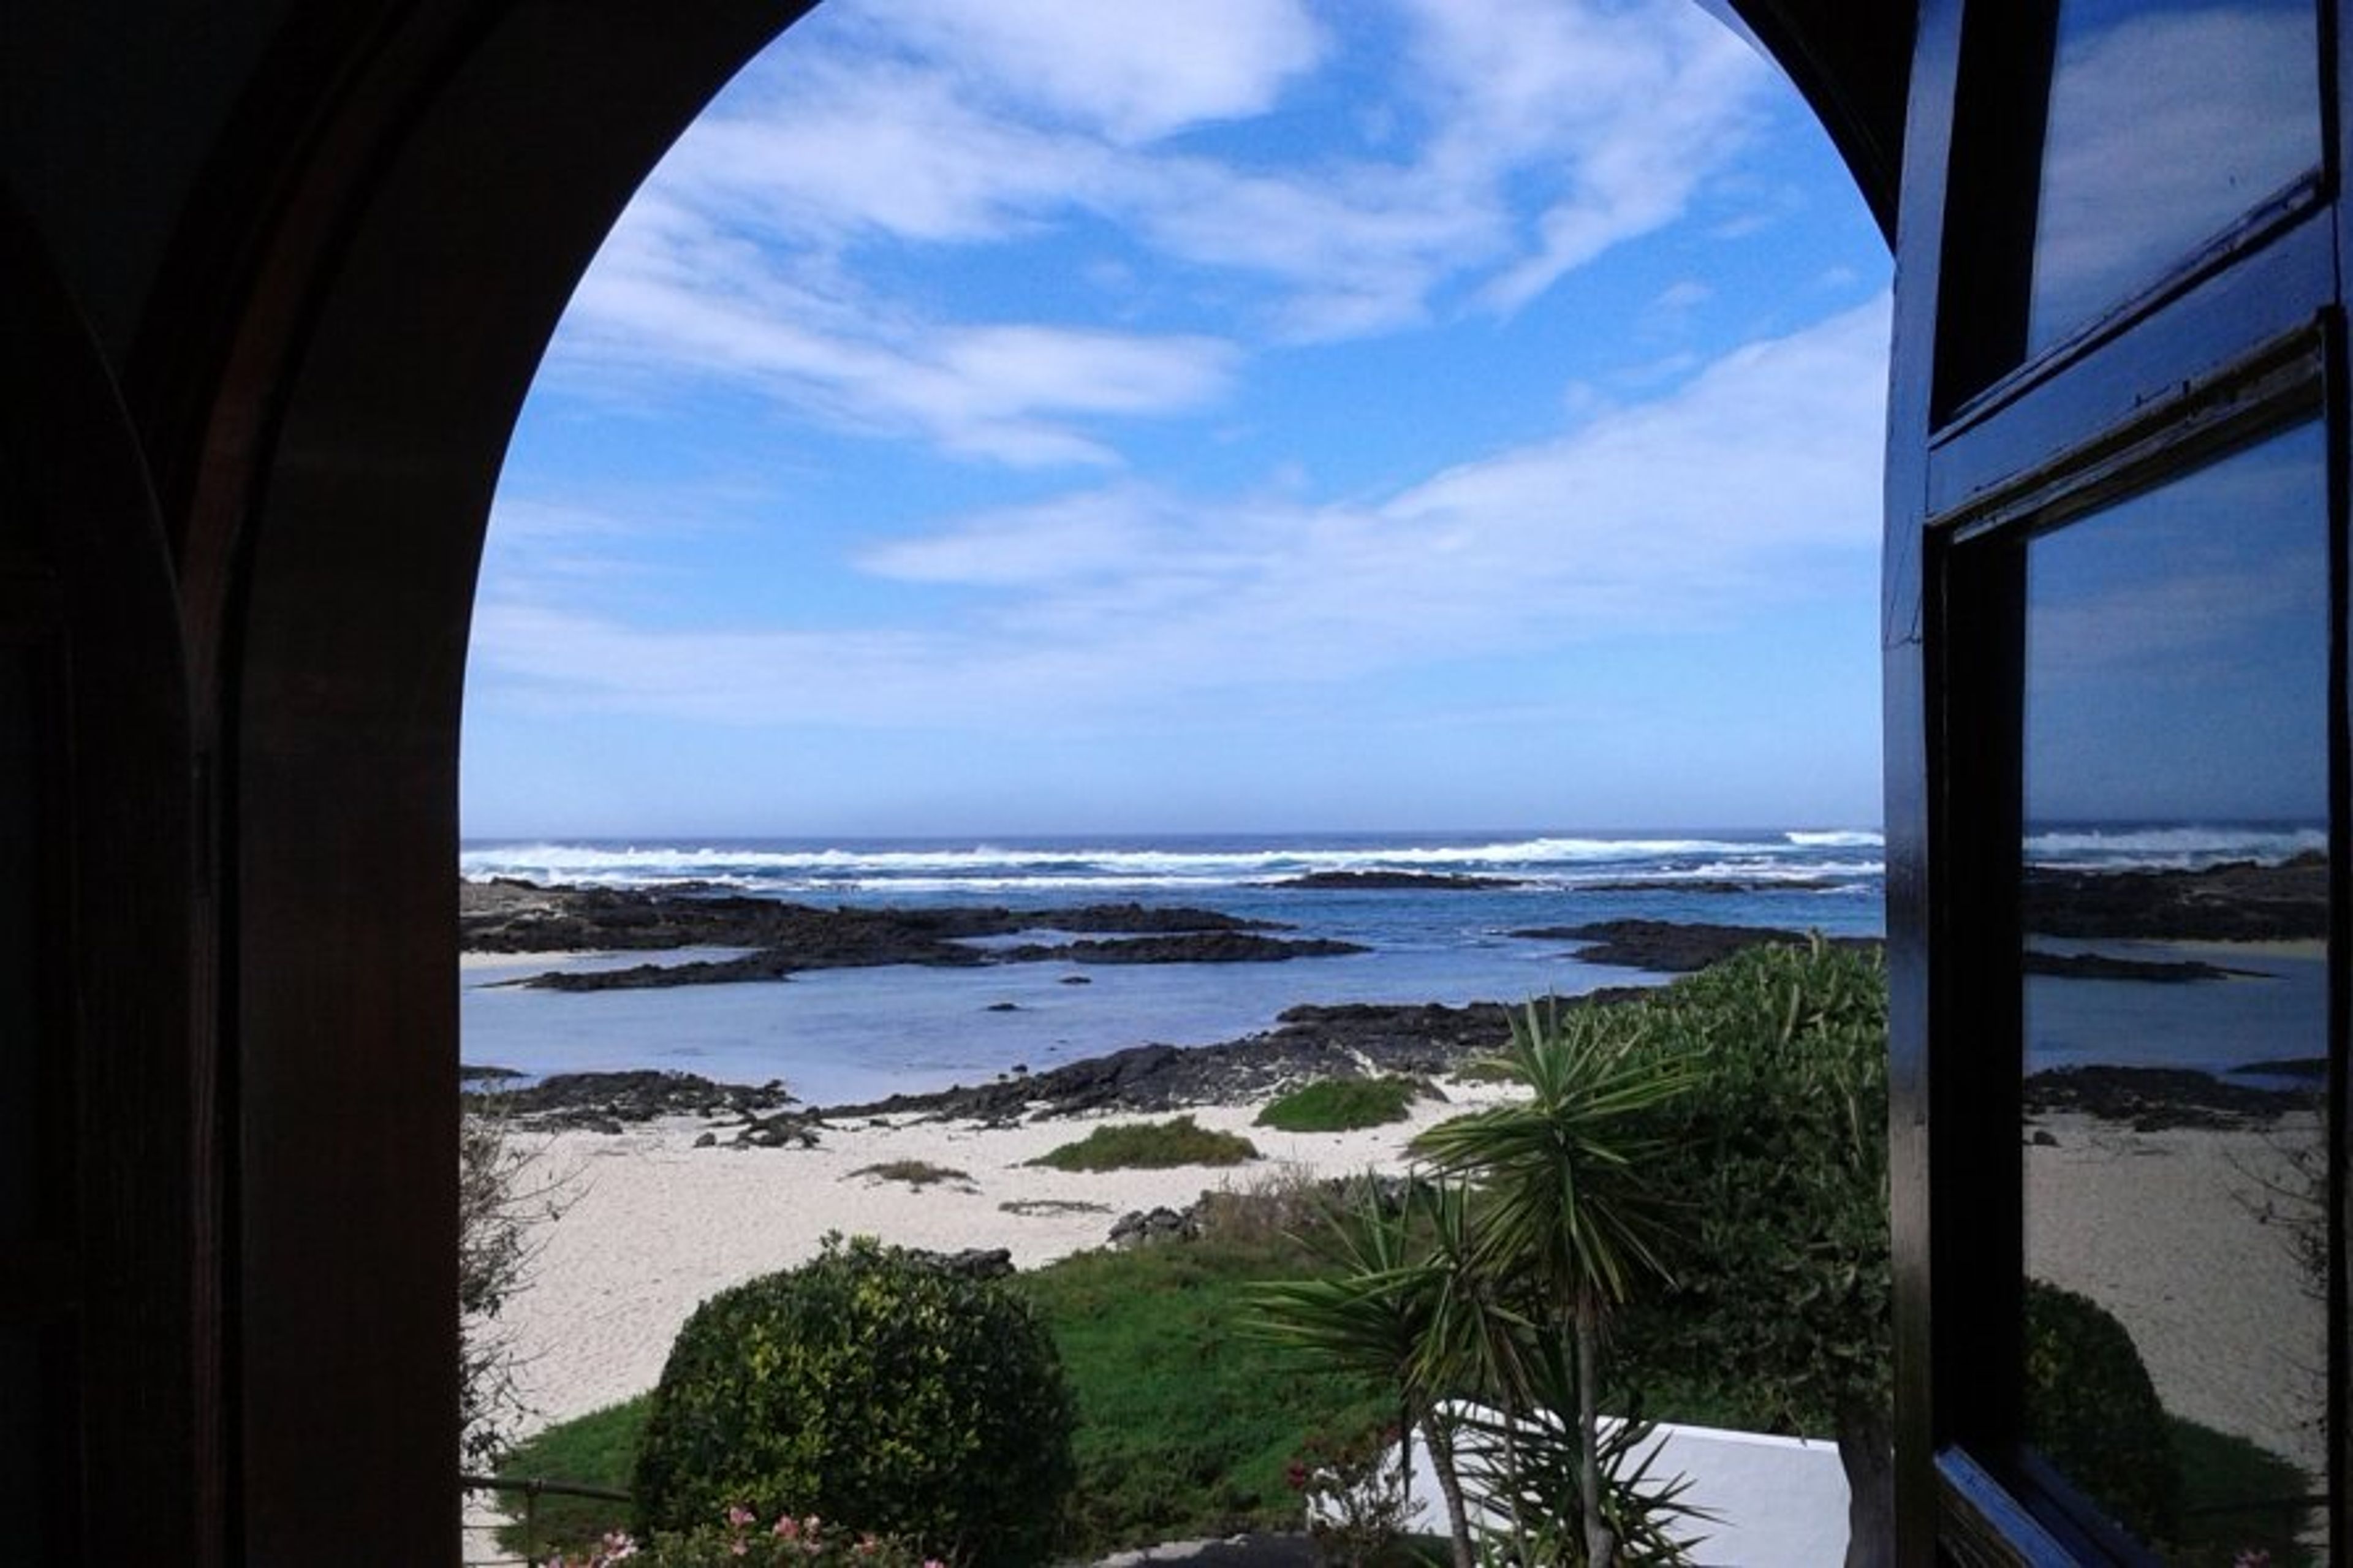 The view from Casa Mirador